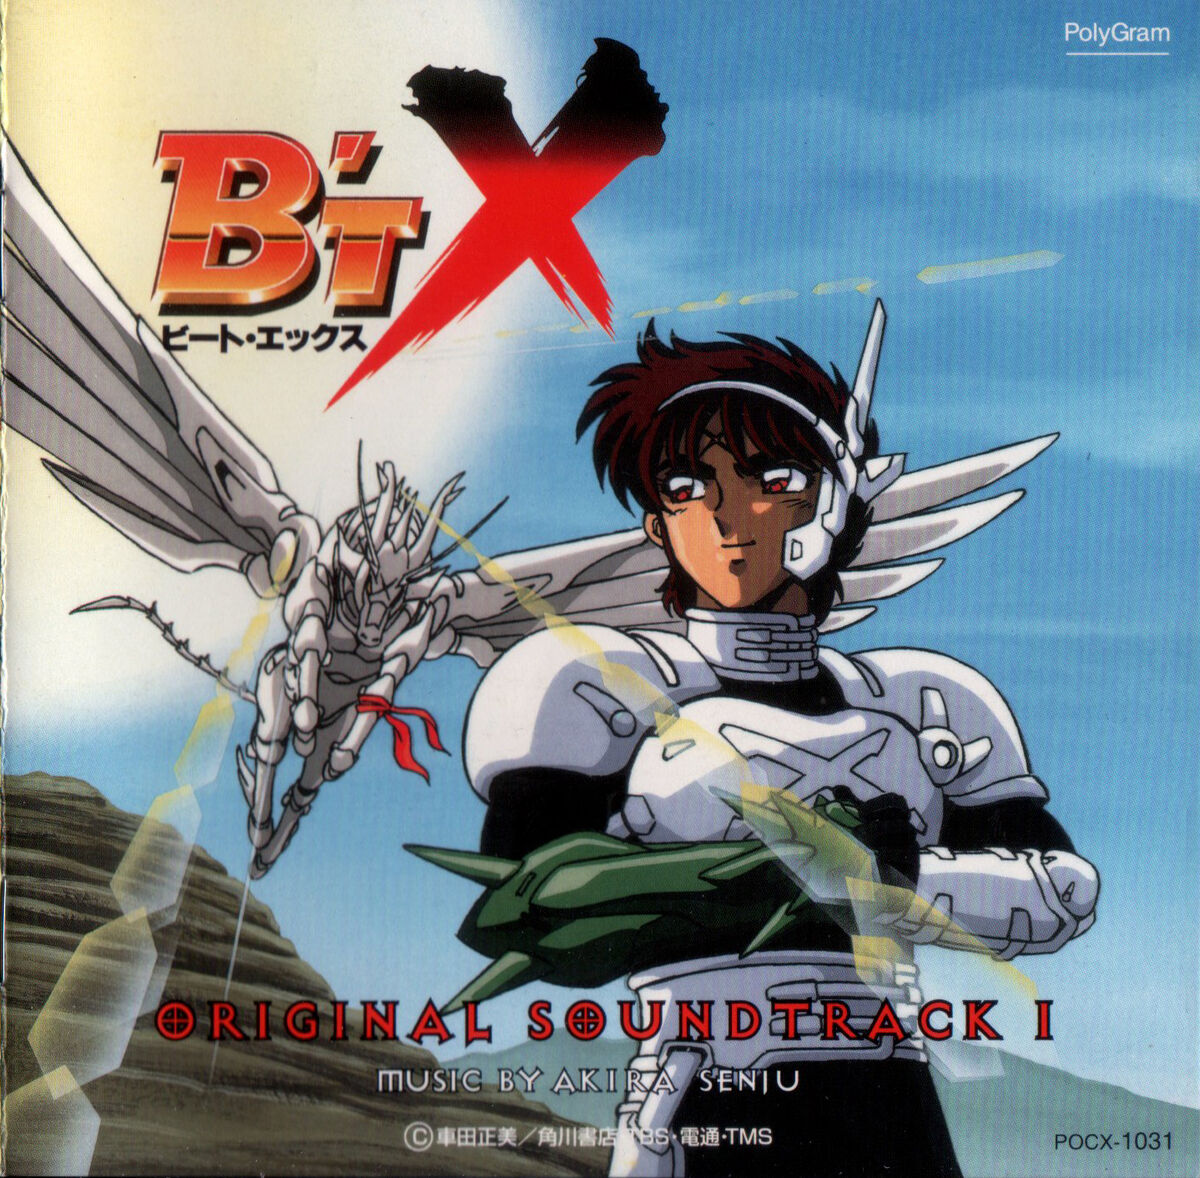 B'T X Original Soundtrack 1 | Btx Wiki | Fandom